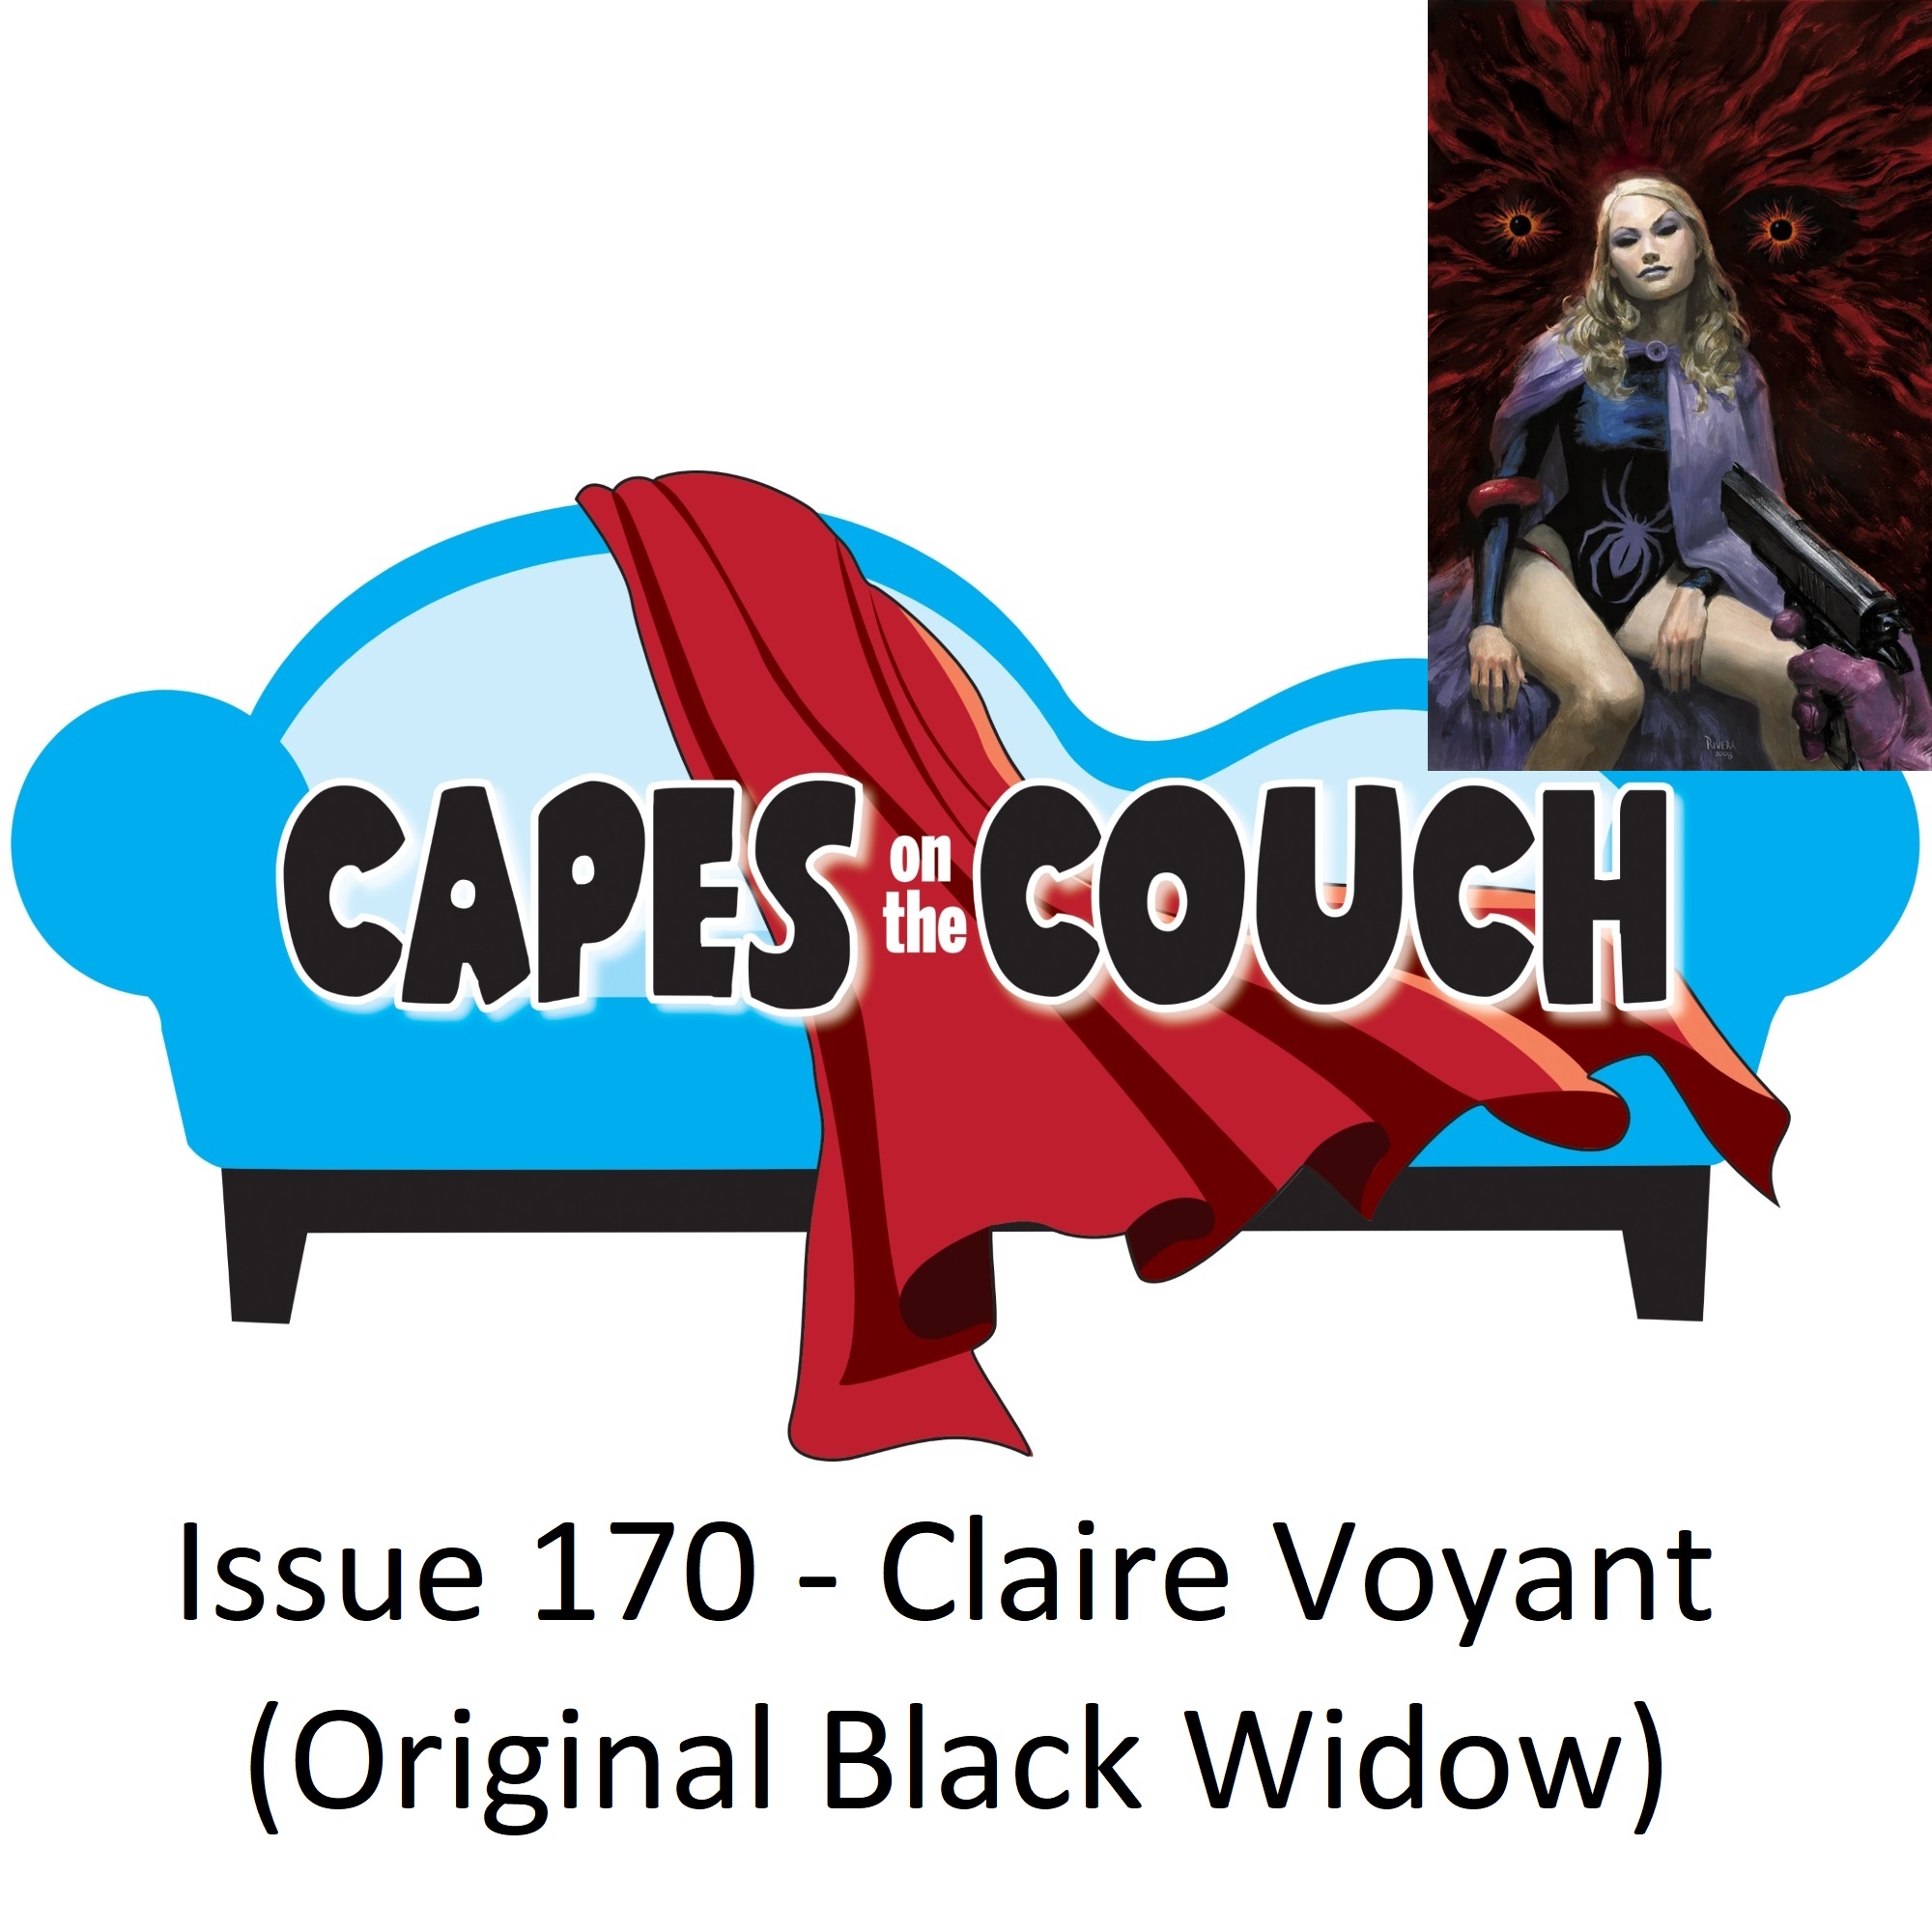 Issue 170 – Claire Voyant (Original Black Widow) post thumbnail image